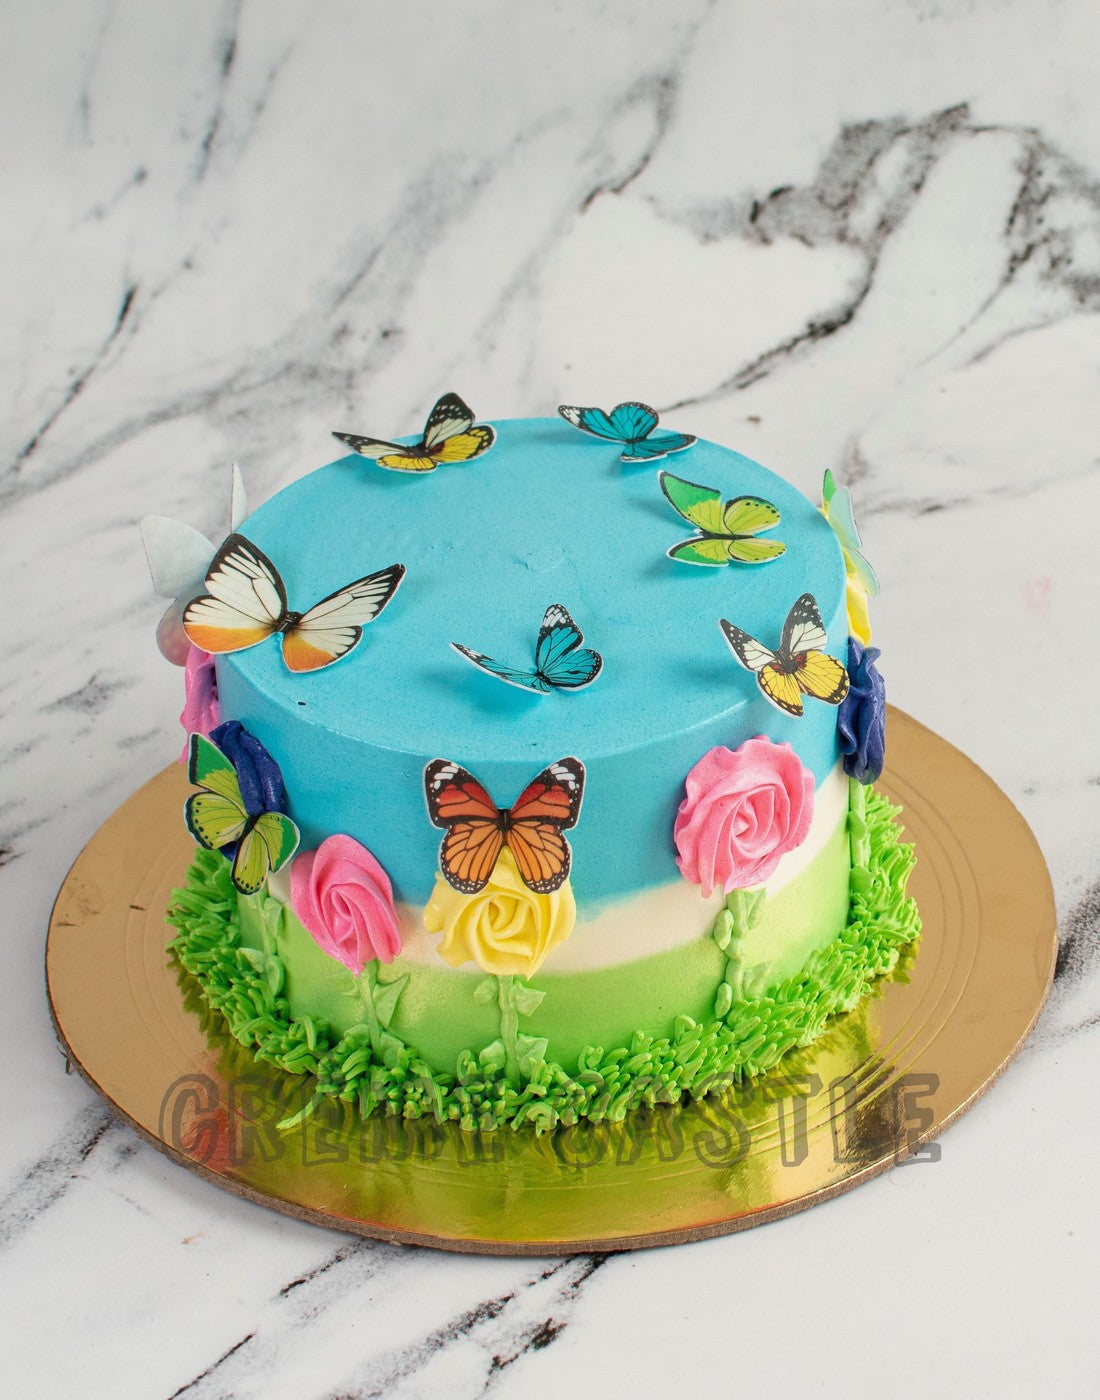 103,965 Birthday Cake Pattern Images, Stock Photos & Vectors | Shutterstock